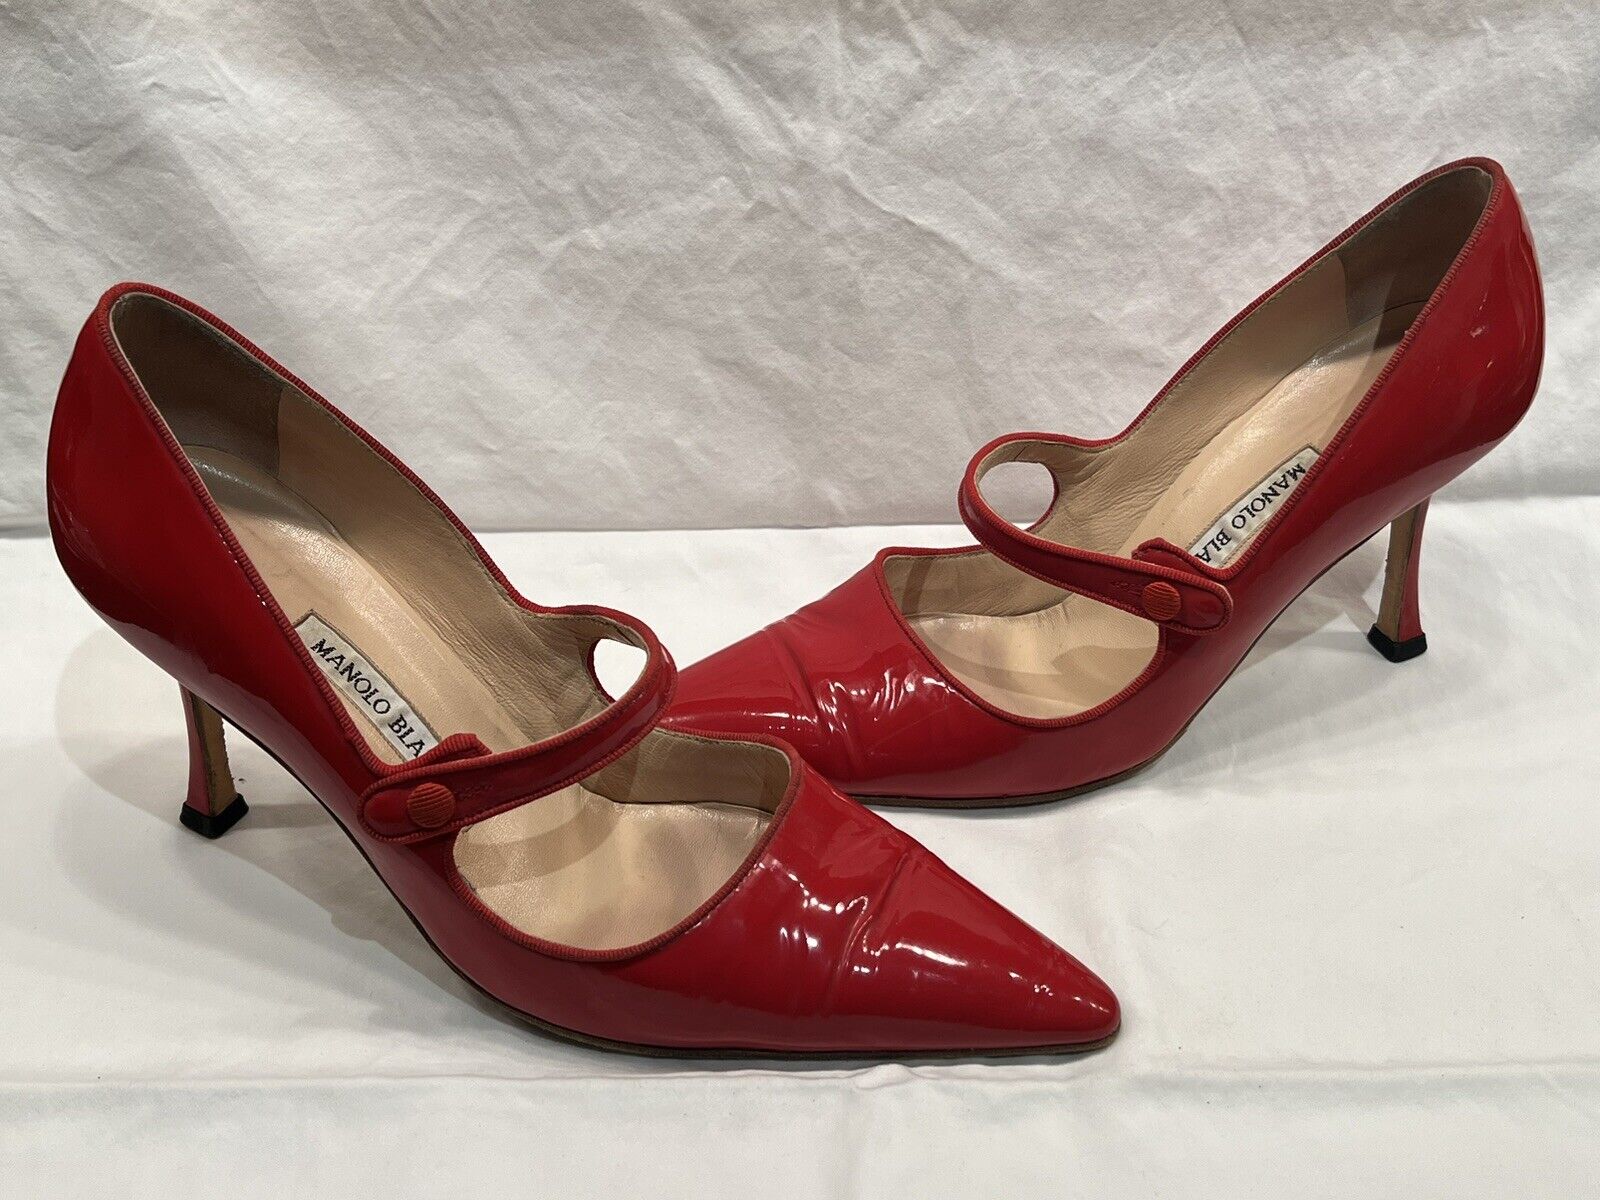 $700+ Manolo Blahnik Bright Red Patent Leather Campari Mary Jane Stiletto Pumps